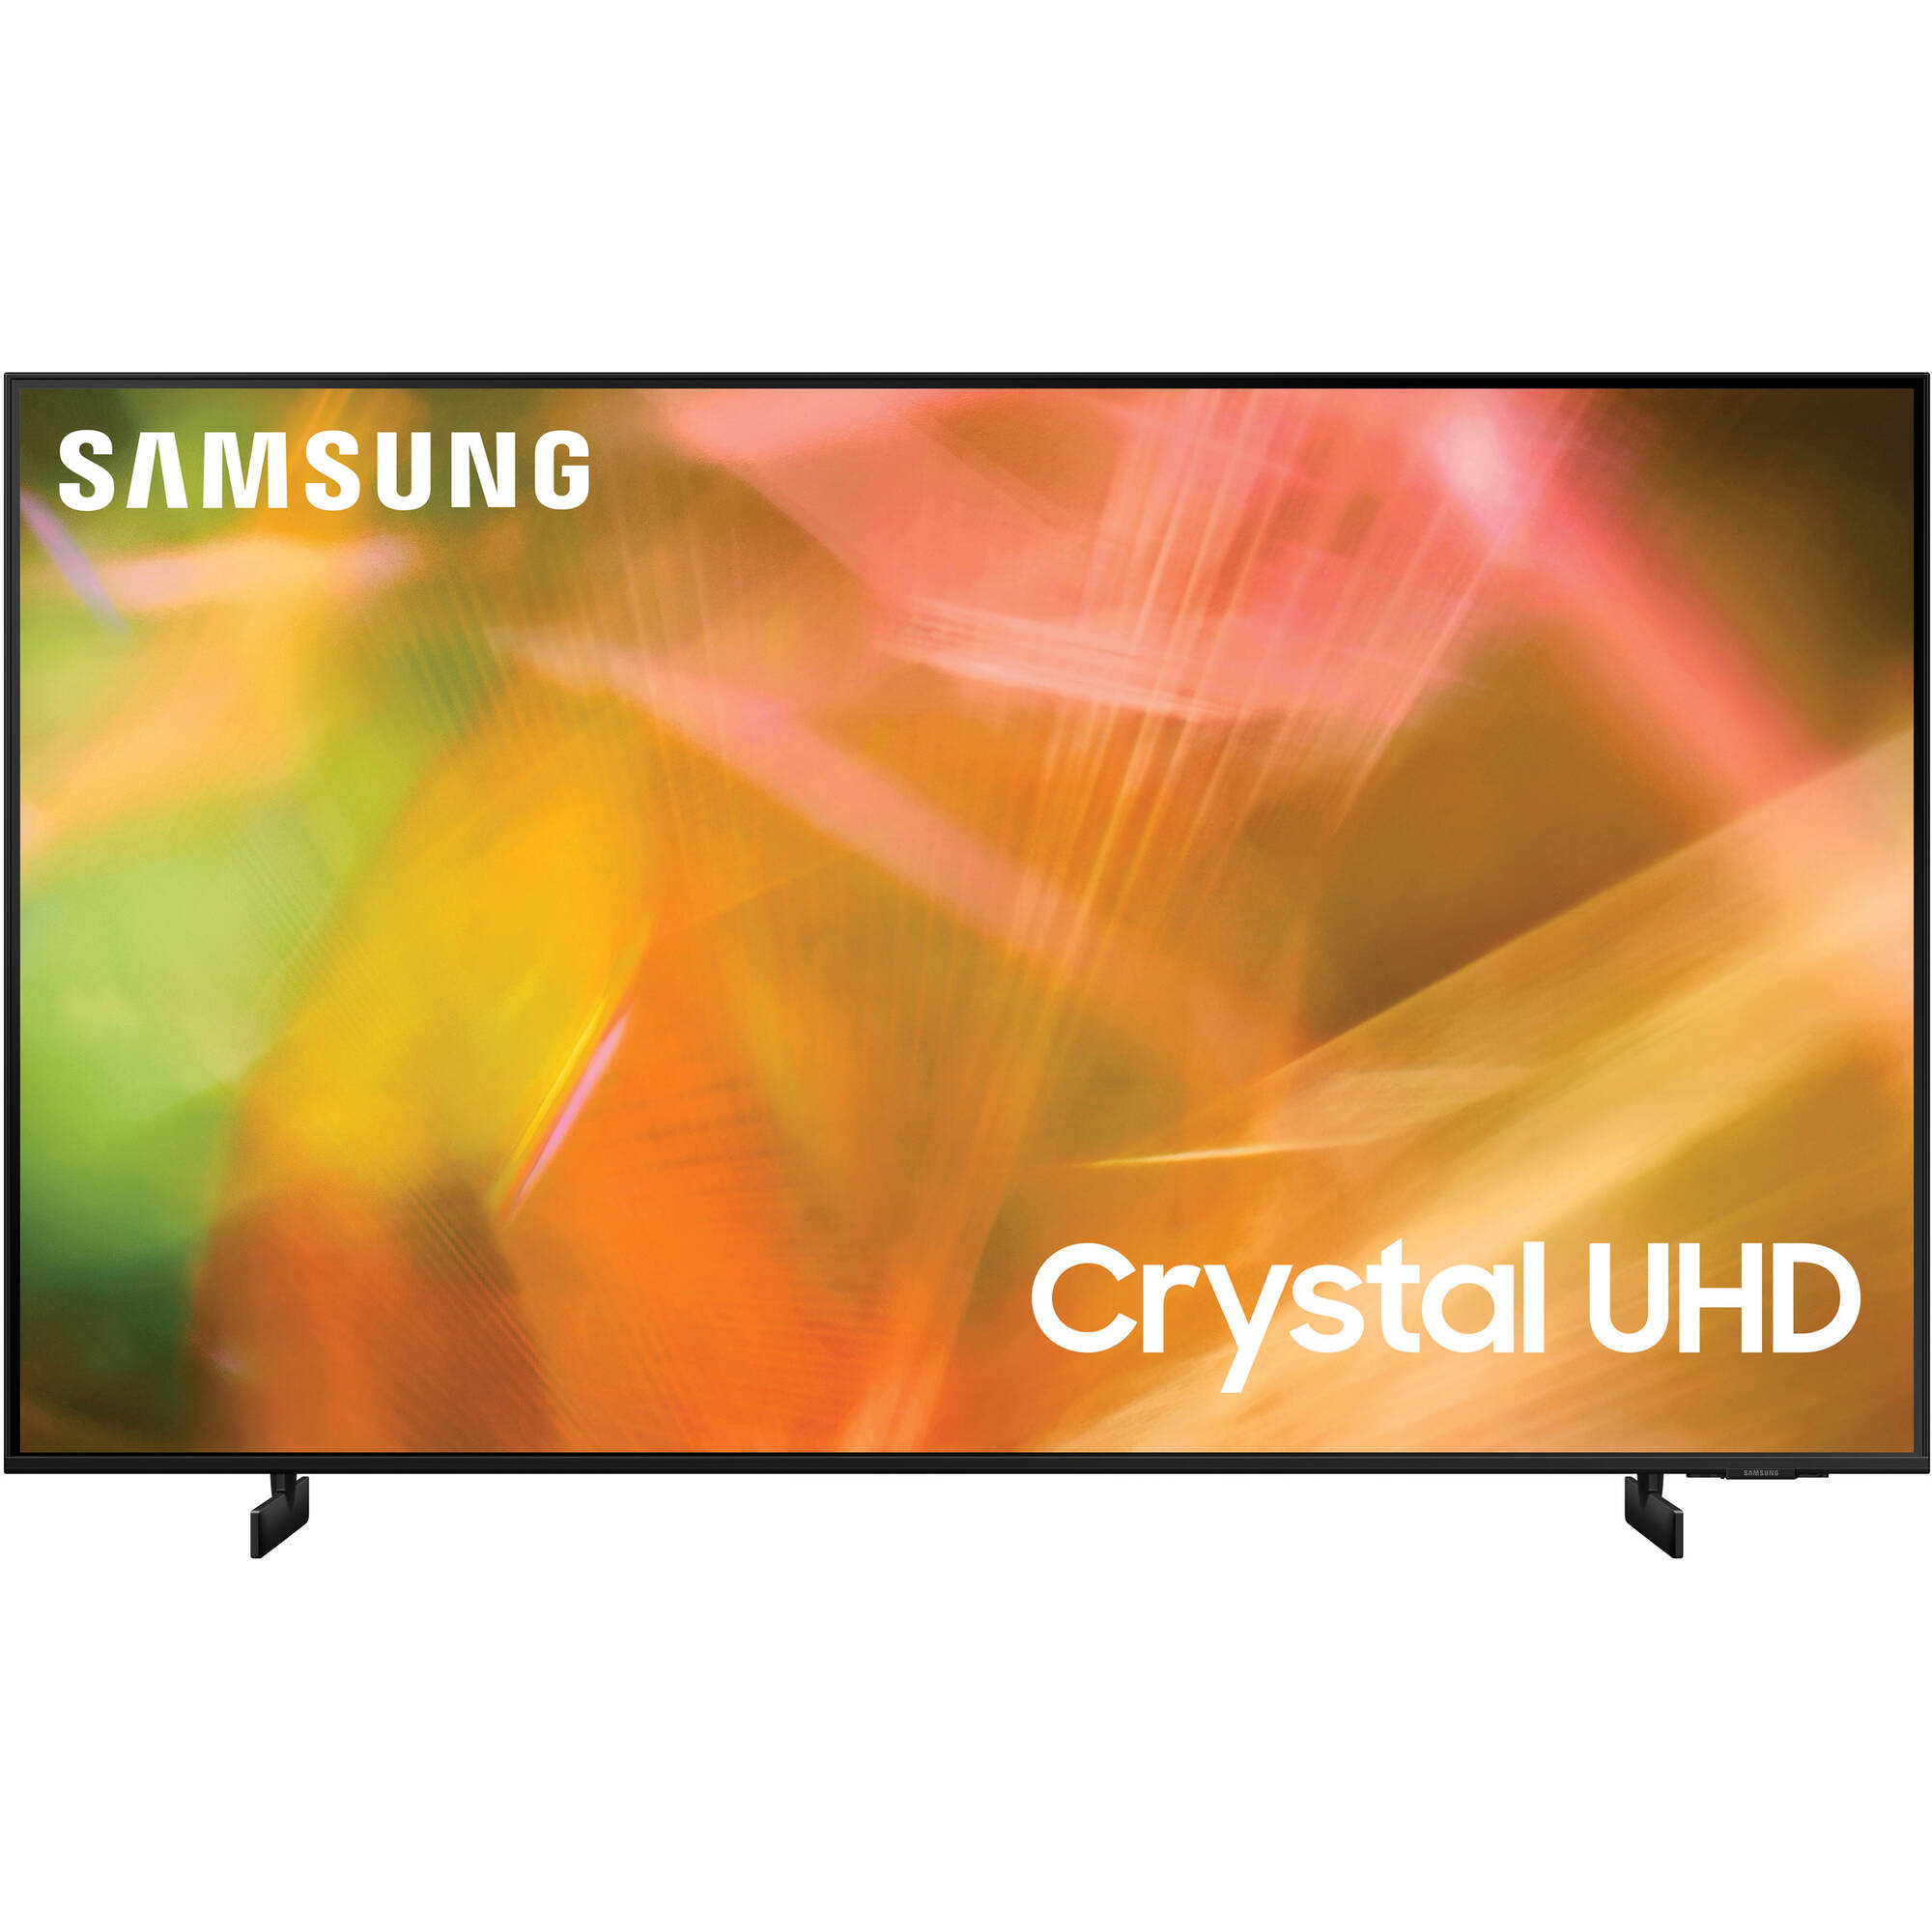 Samsung Au8000 50 "Clase HDR 4K UHD Smart LED TV